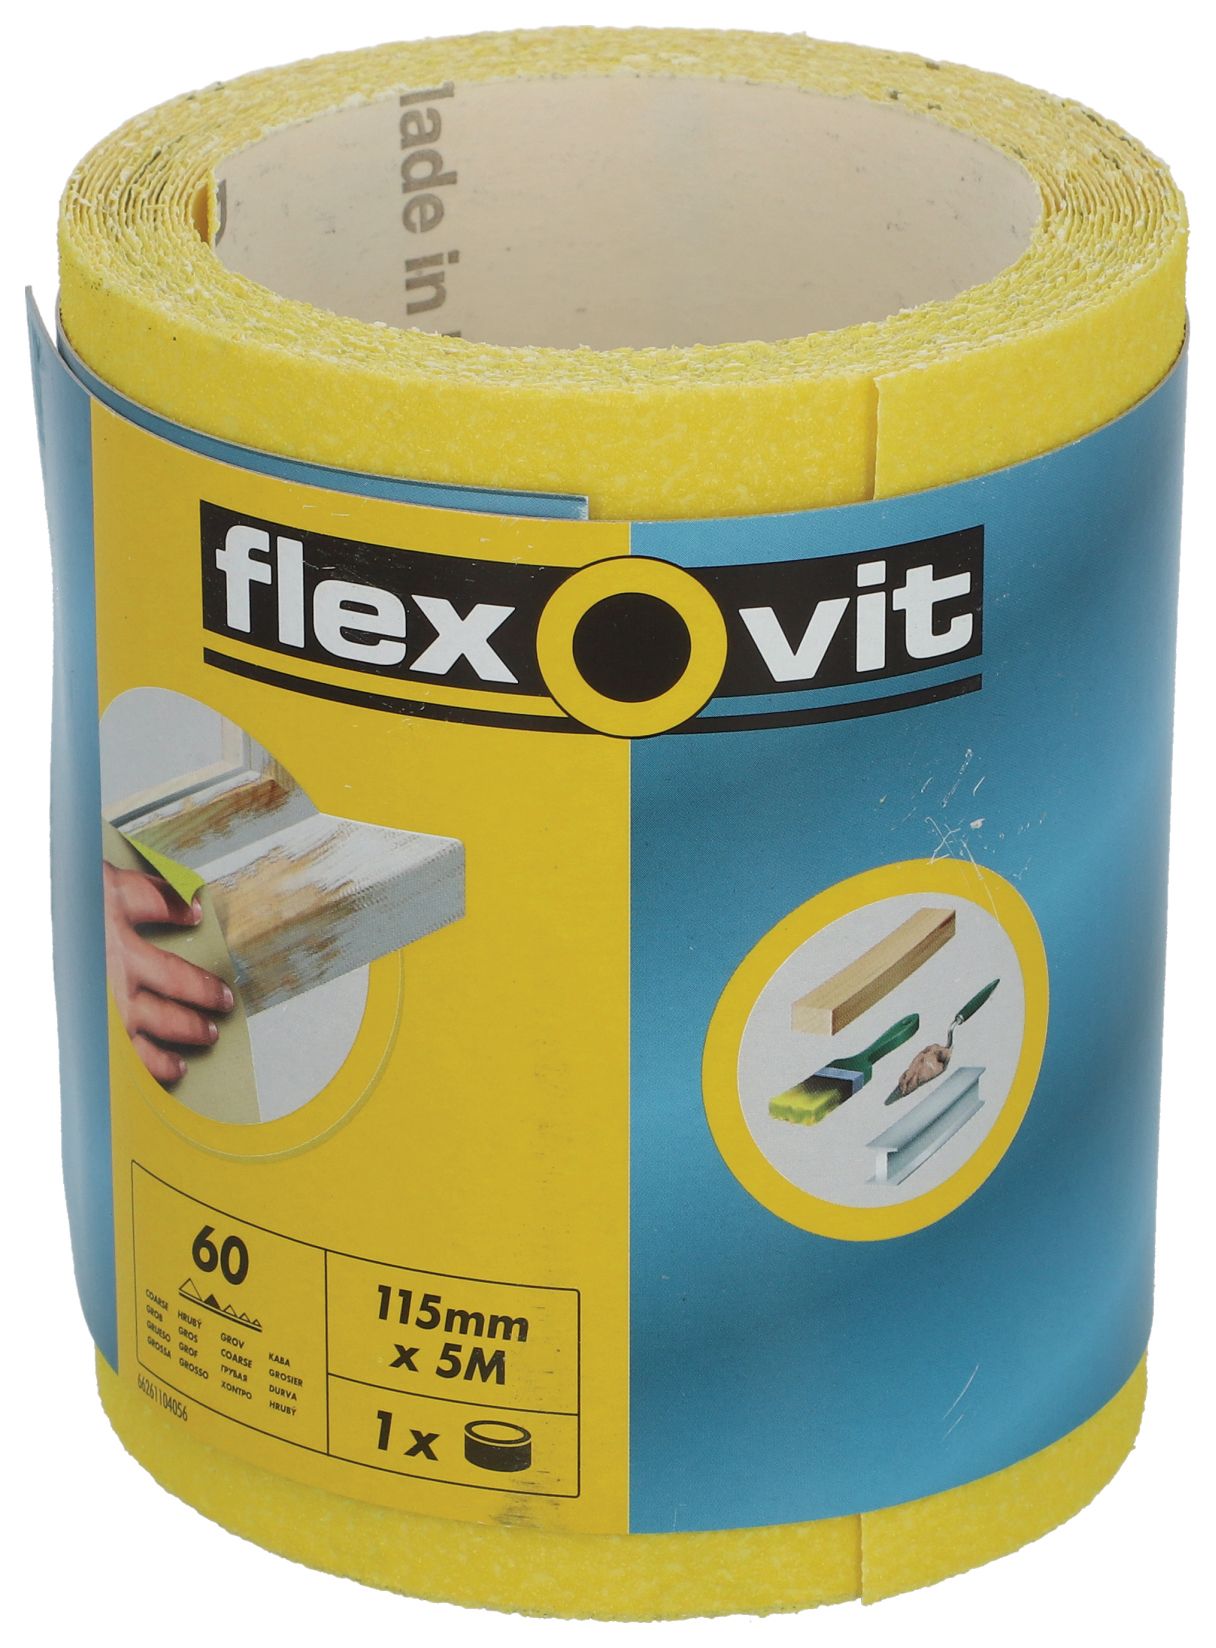 Image of Flexovit 60 Grit Coarse Sanding Roll - 5m x 115mm